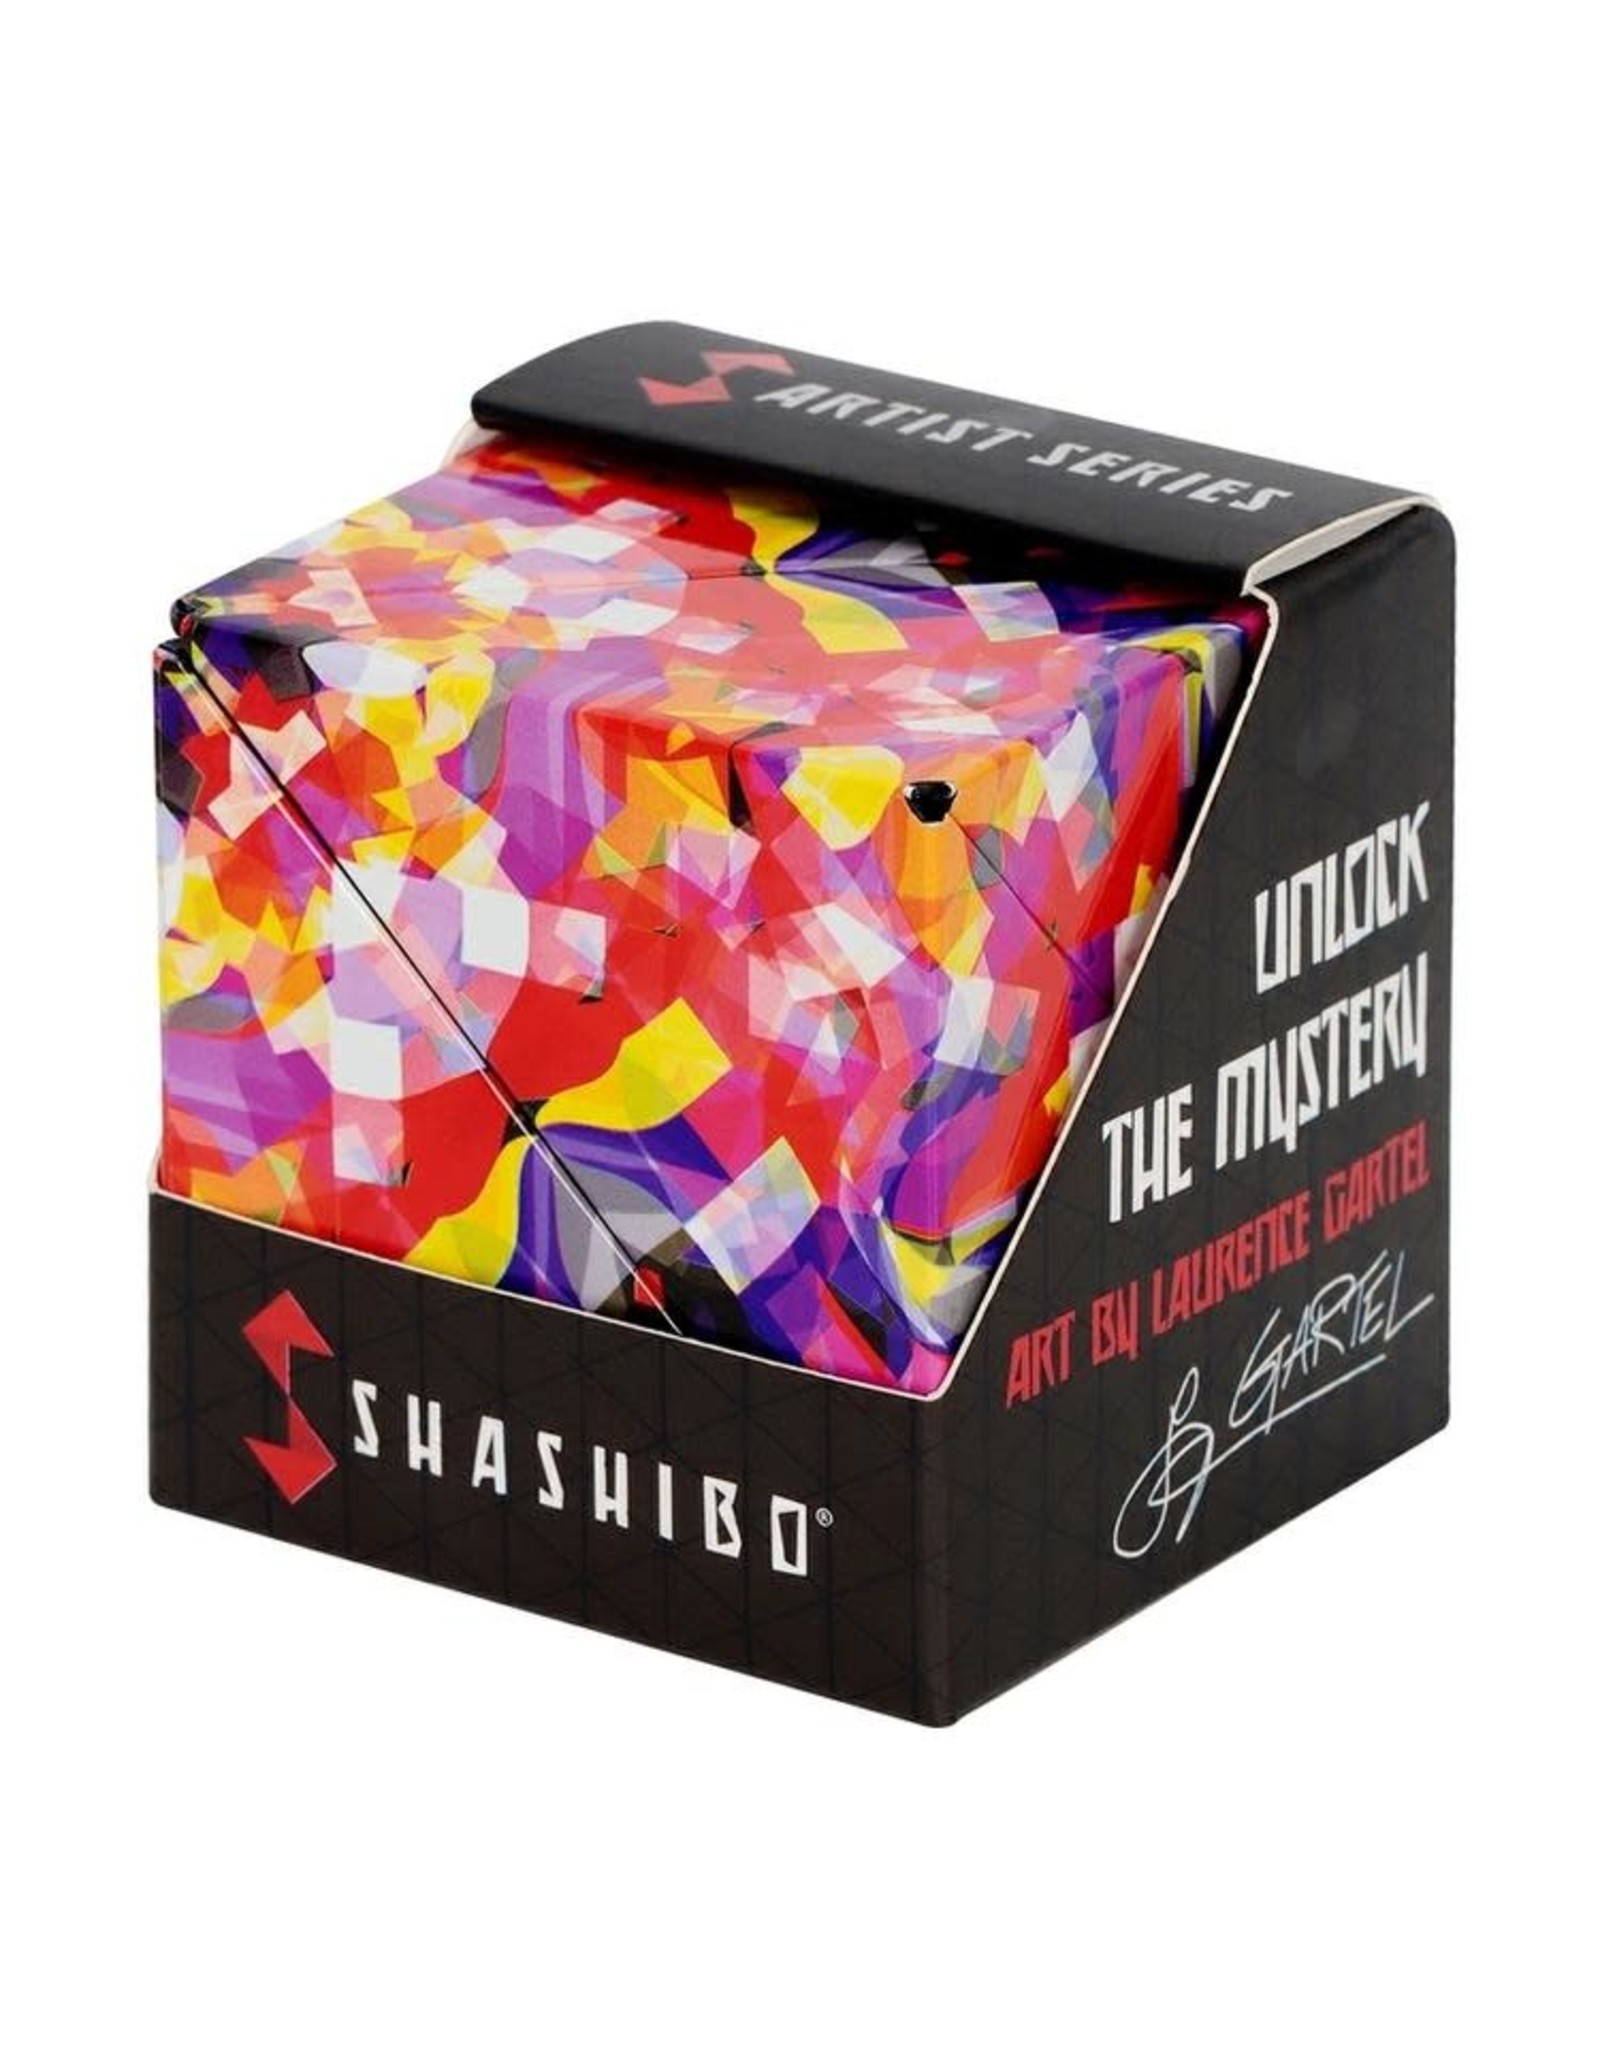 Shashibo Shape Shifting Box (Confetti)